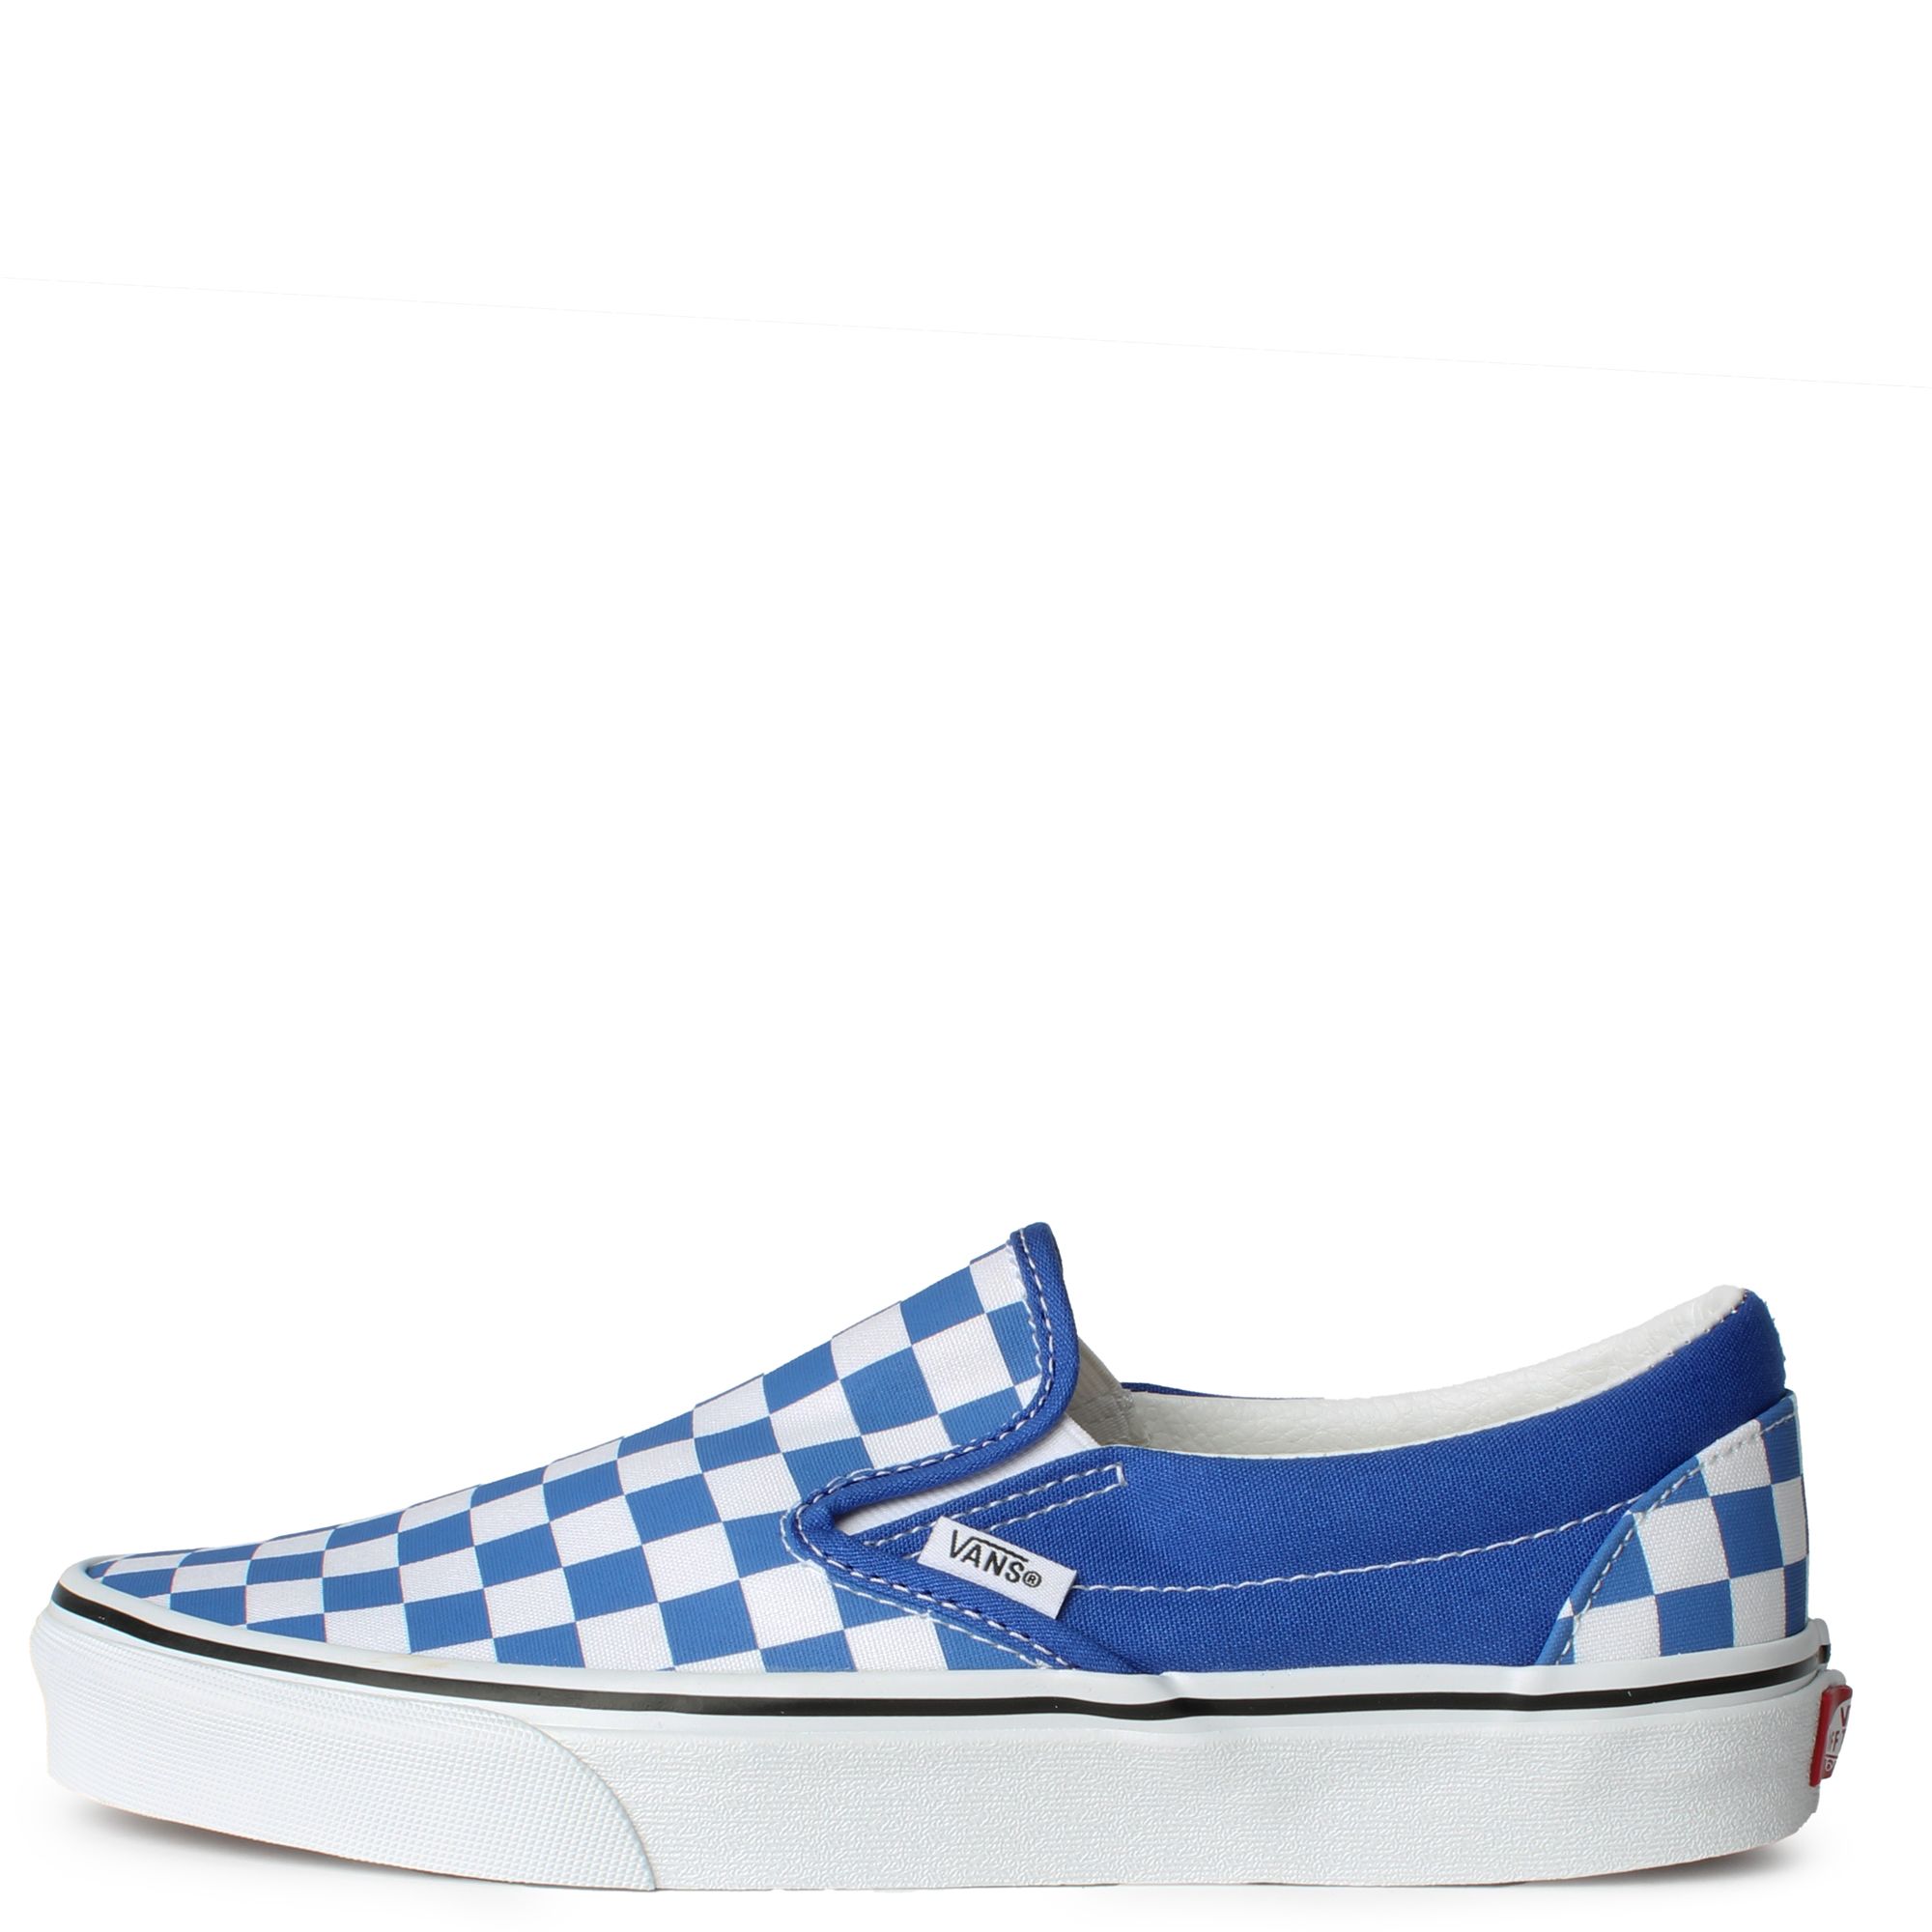 Vans Slip On classic checkerboard sneakers in blue